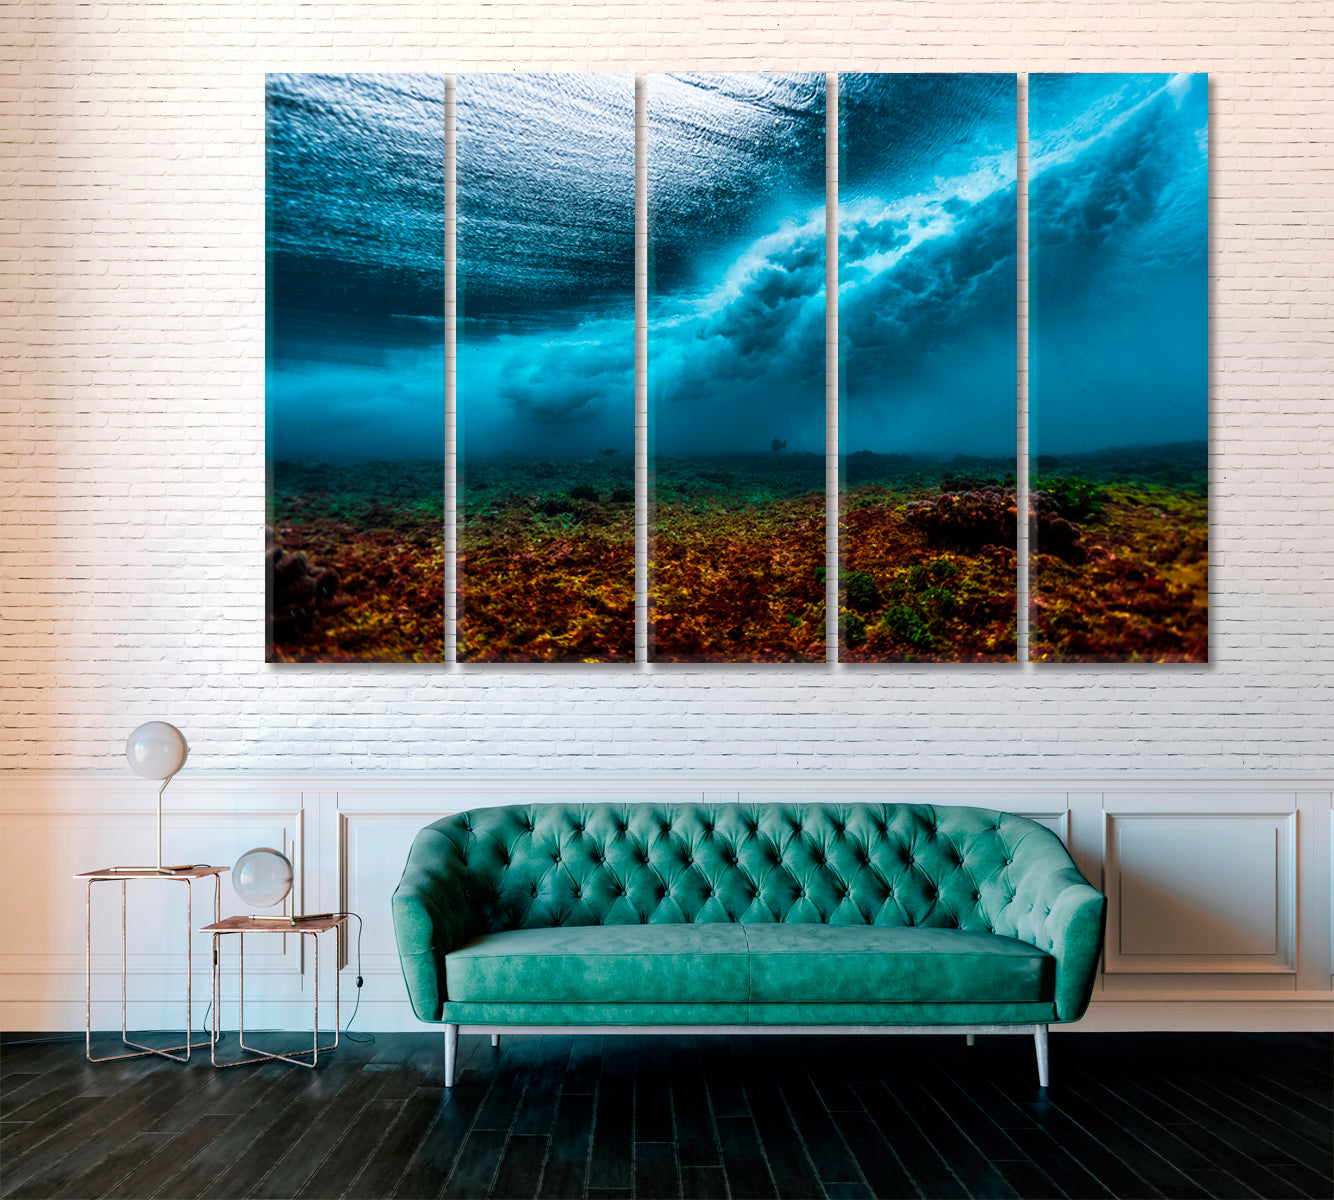 Ocean Underwater View Canvas Print ArtLexy 5 Panels 36"x24" inches 